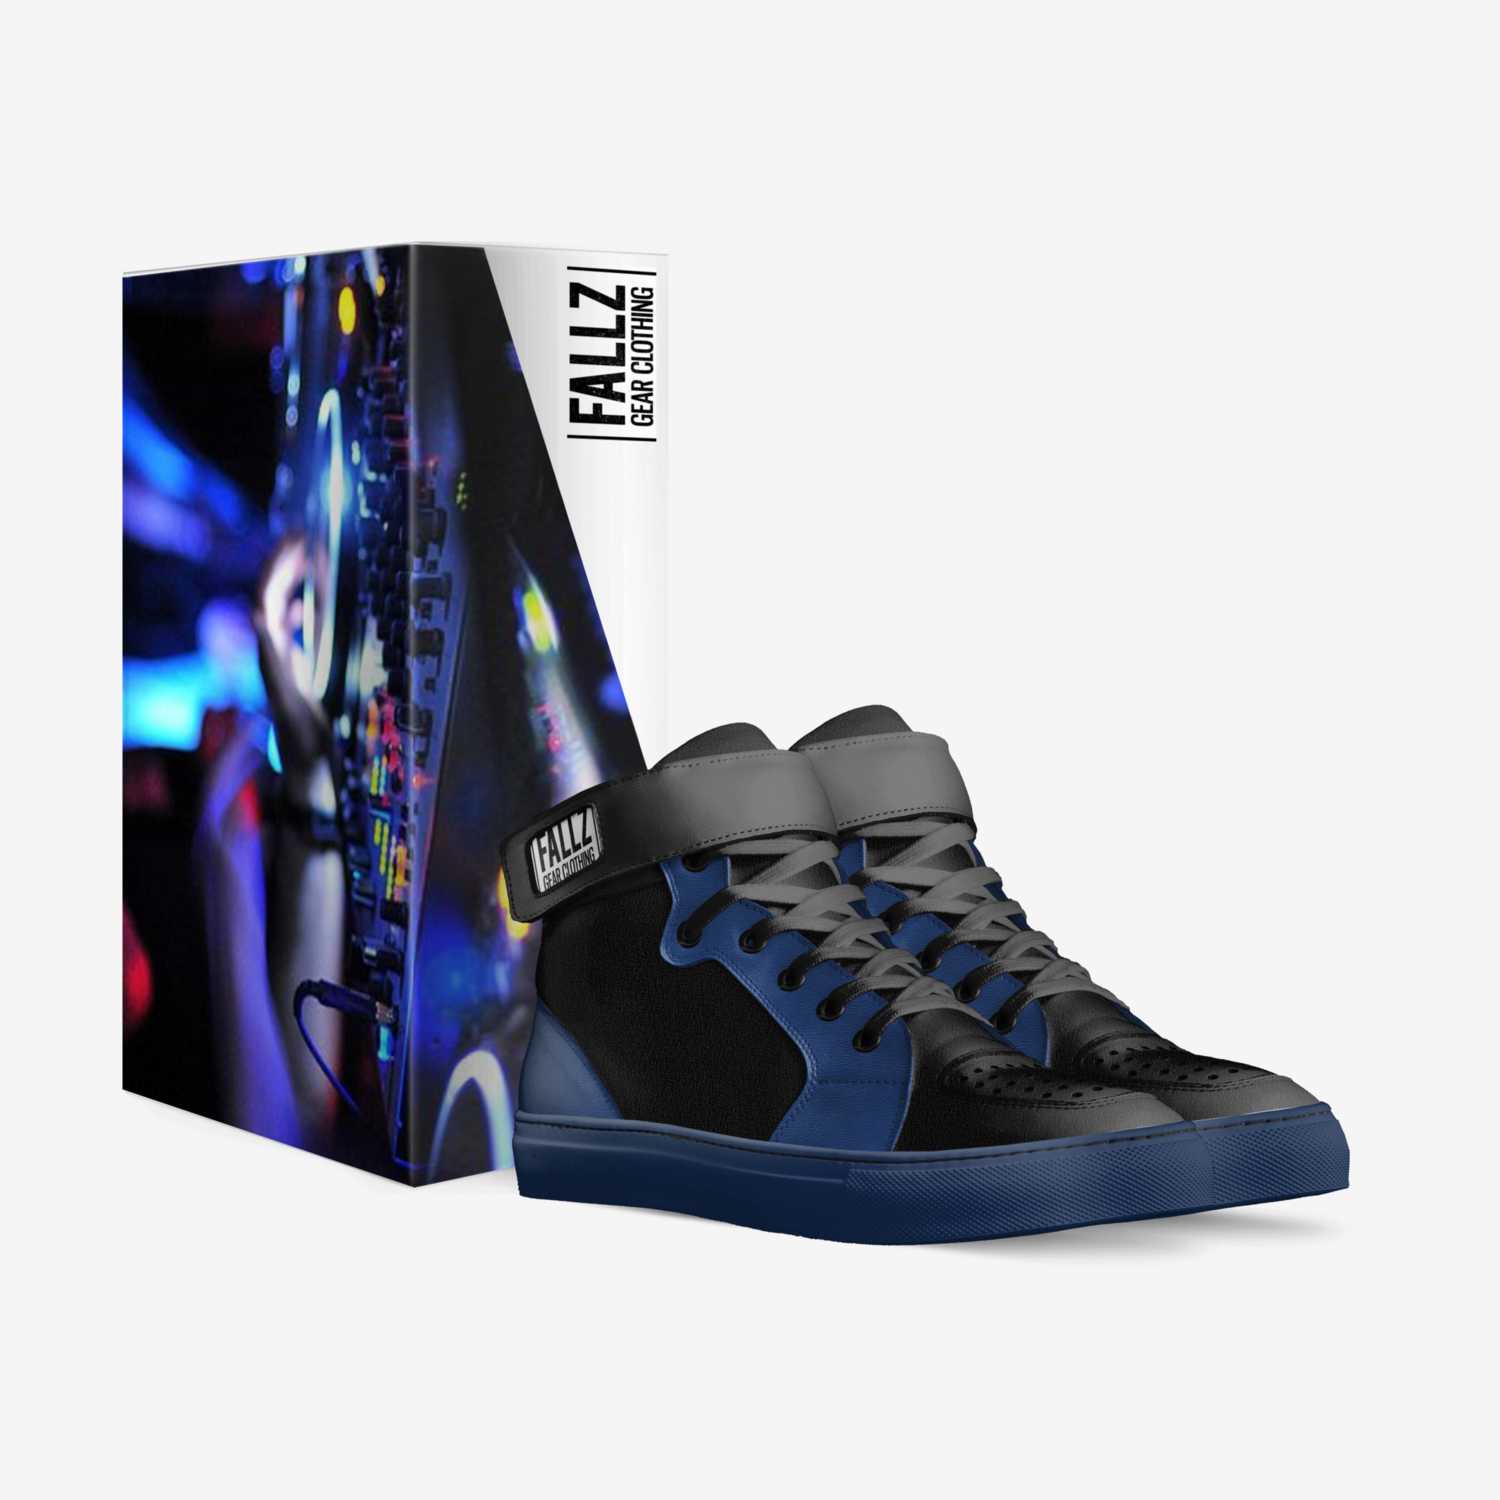 Fallz Gear-The DJ custom made in Italy shoes by Fallz Gear | Box view